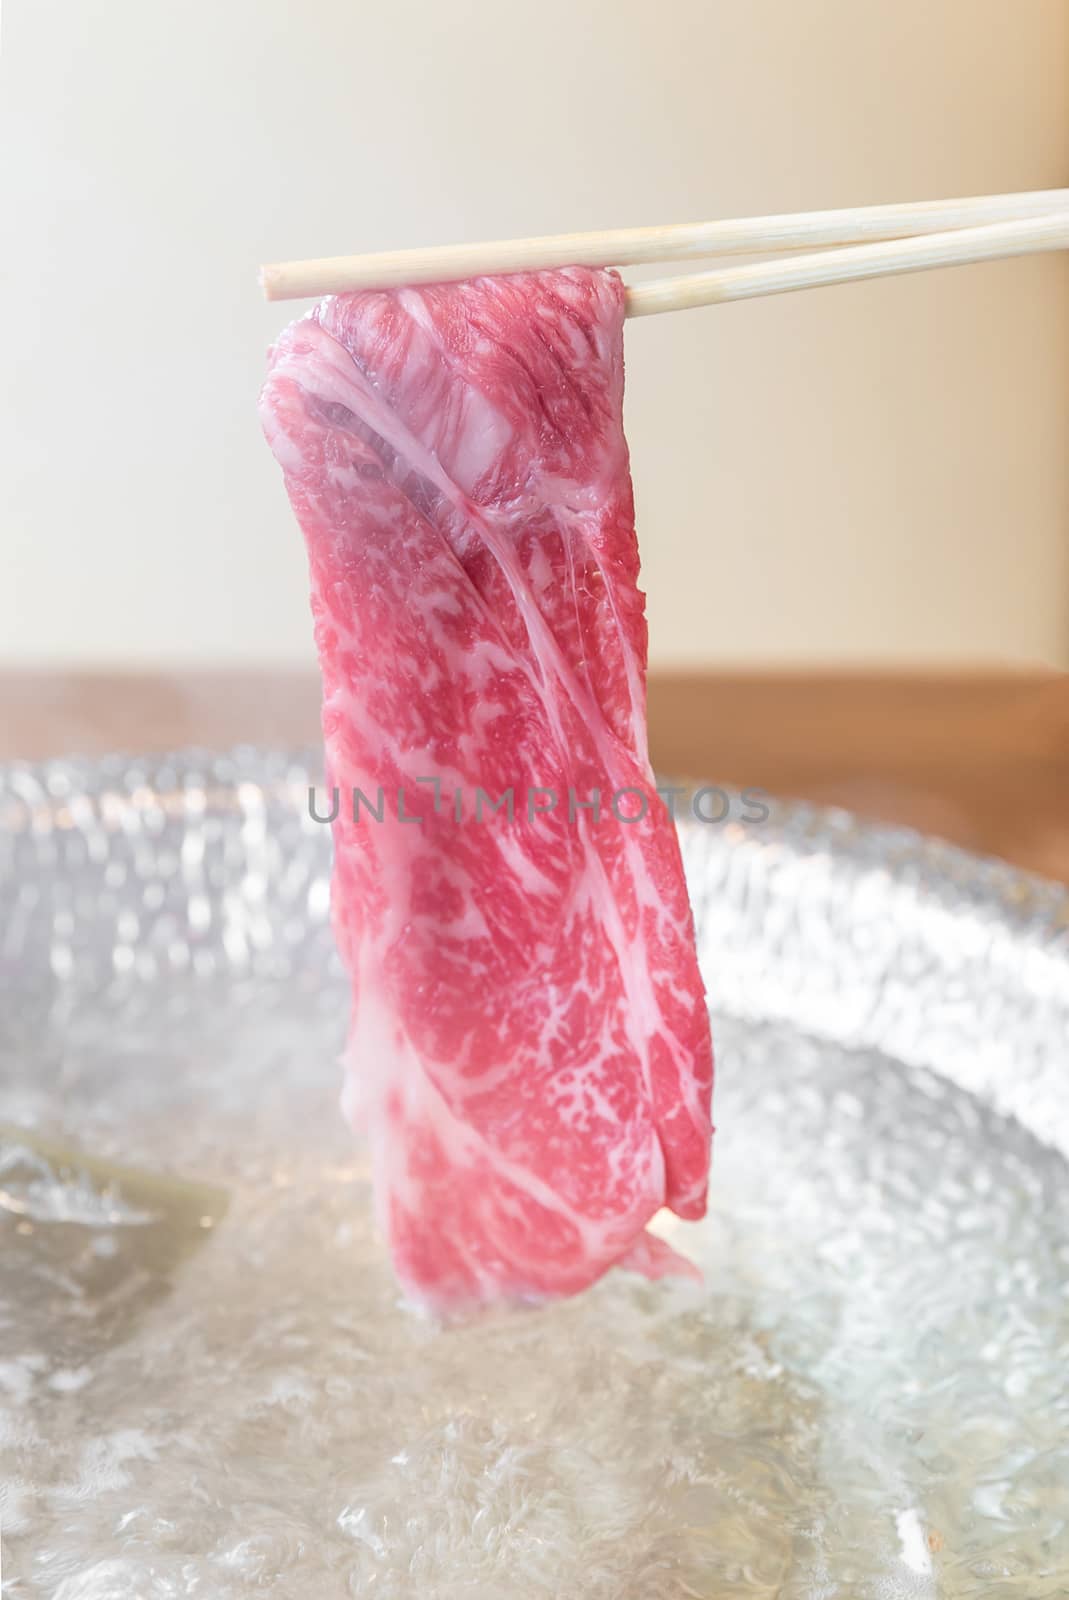 Beef Wagyu A5 Shabu shabu with steam, Groumet Japanese hot pot cuisine